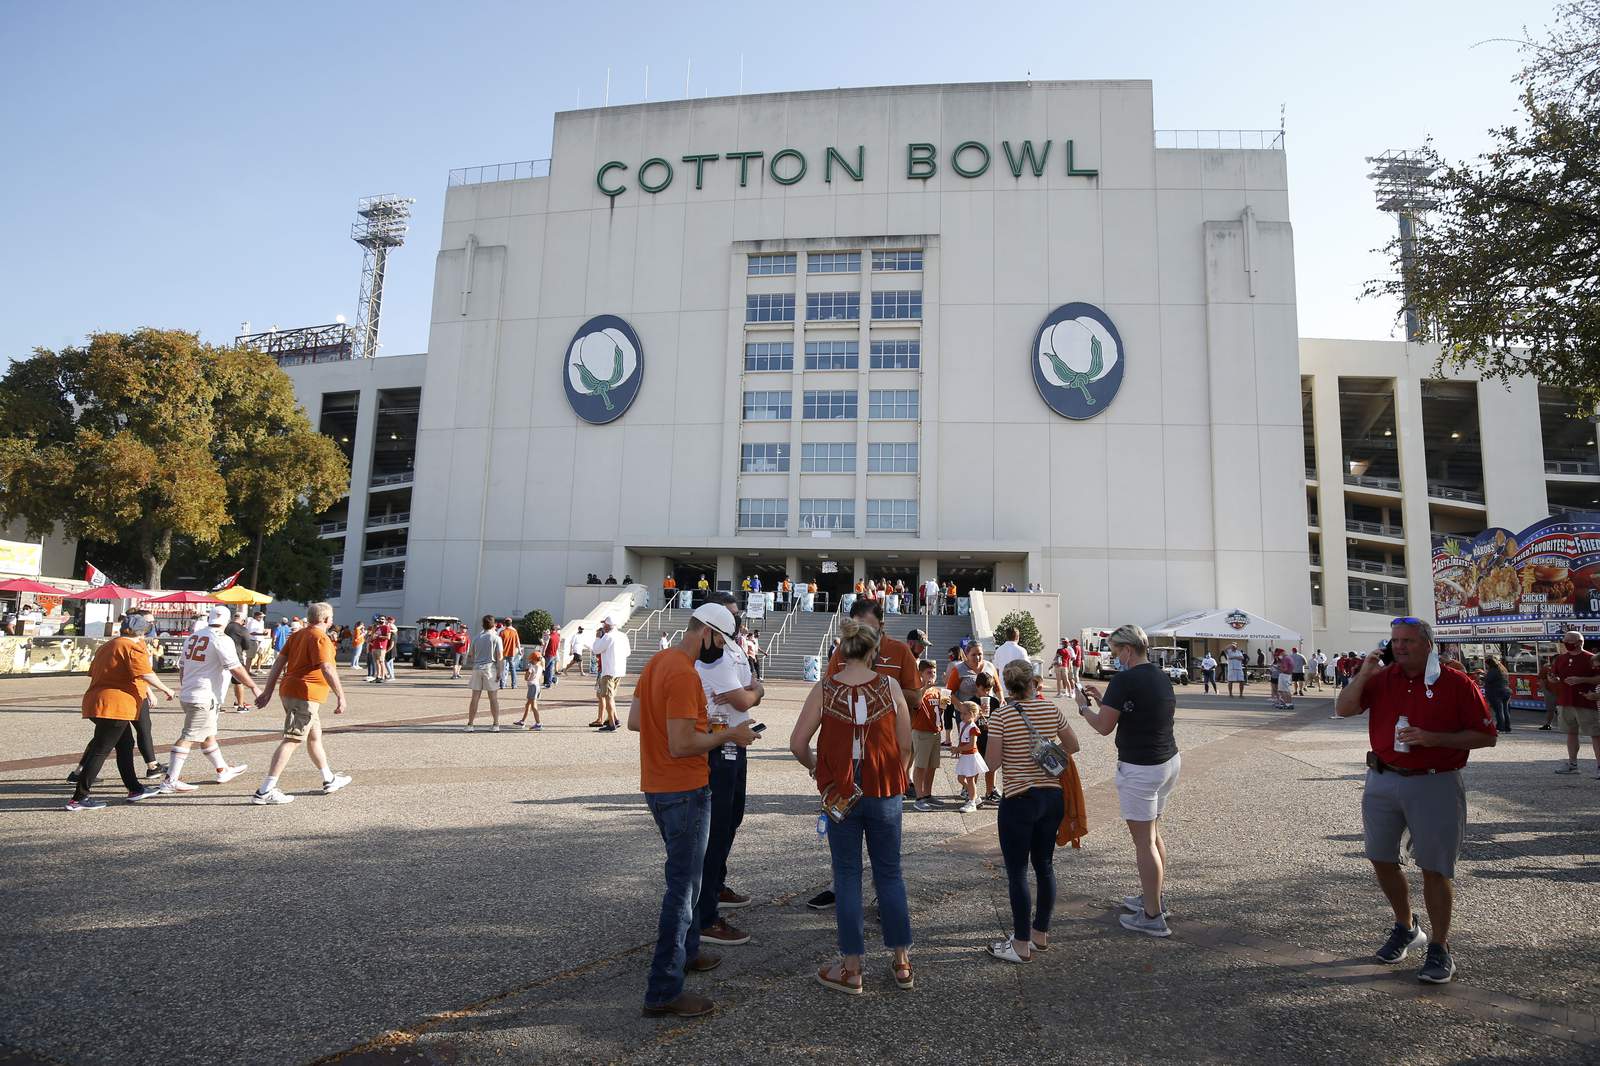 No fair, few fans: Texas, OU play on despite different feel